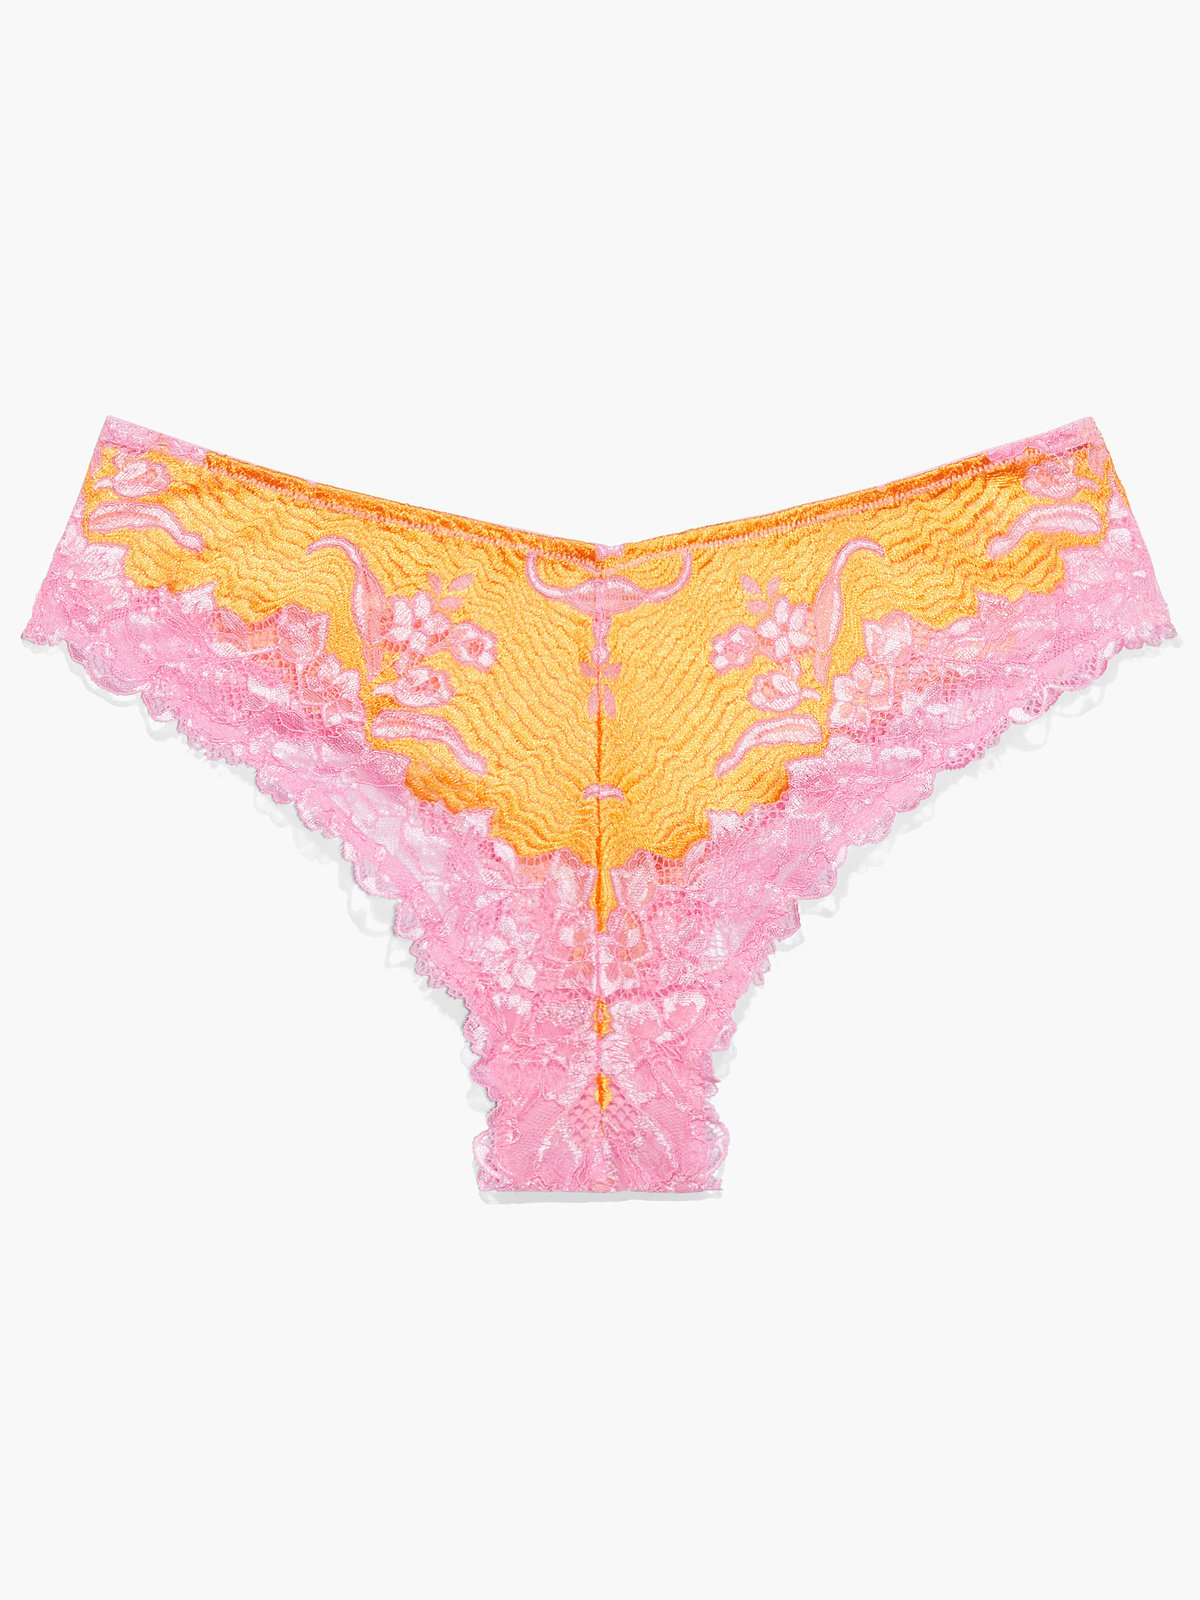 Lace'd Up Padded Low Balconette Bra in Multi & Orange & Pink